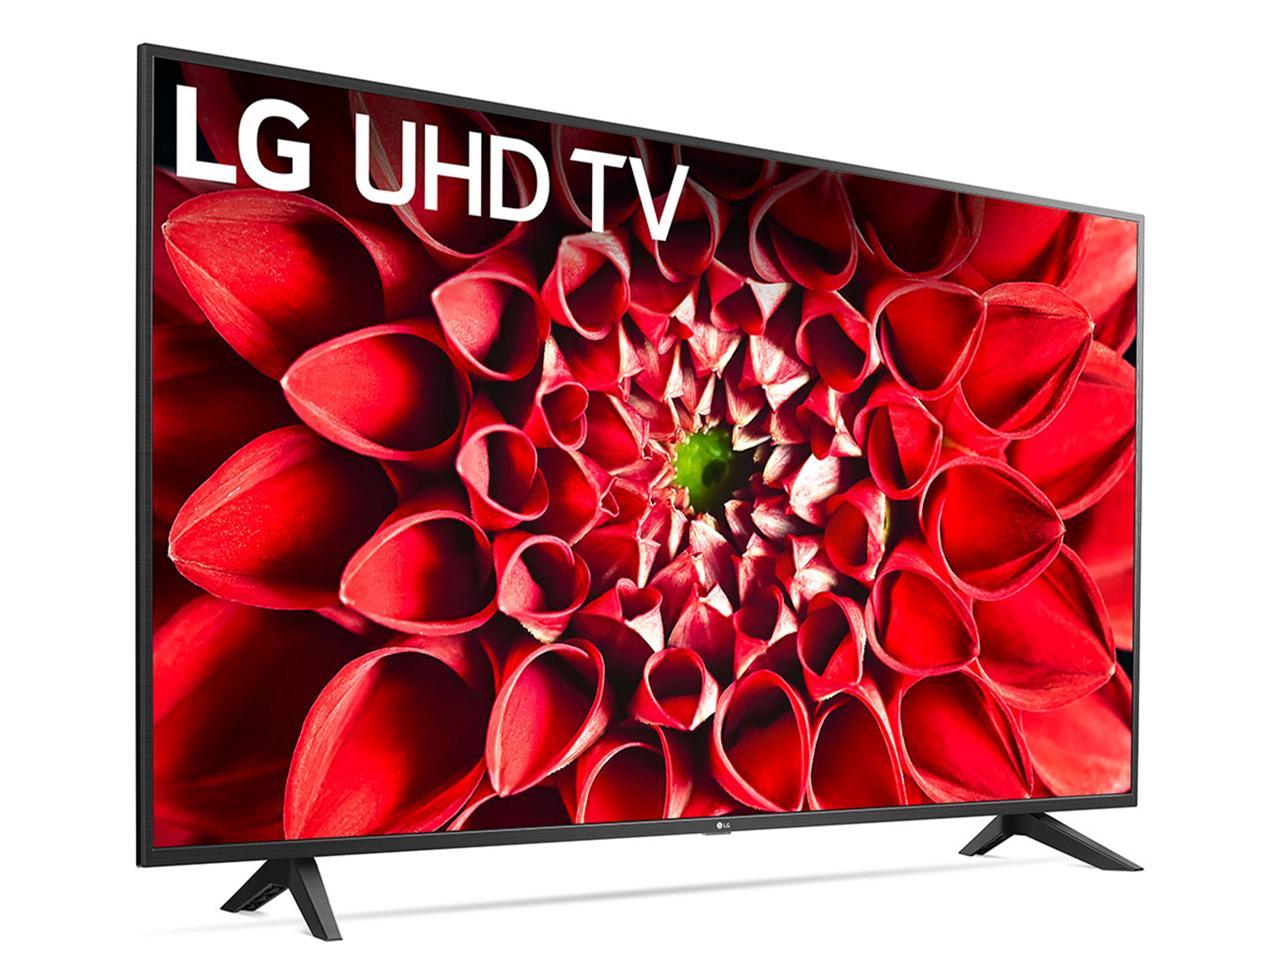 LG 70 Series 65" 4K UHD Smart TV 65UN7000PUD (2020)